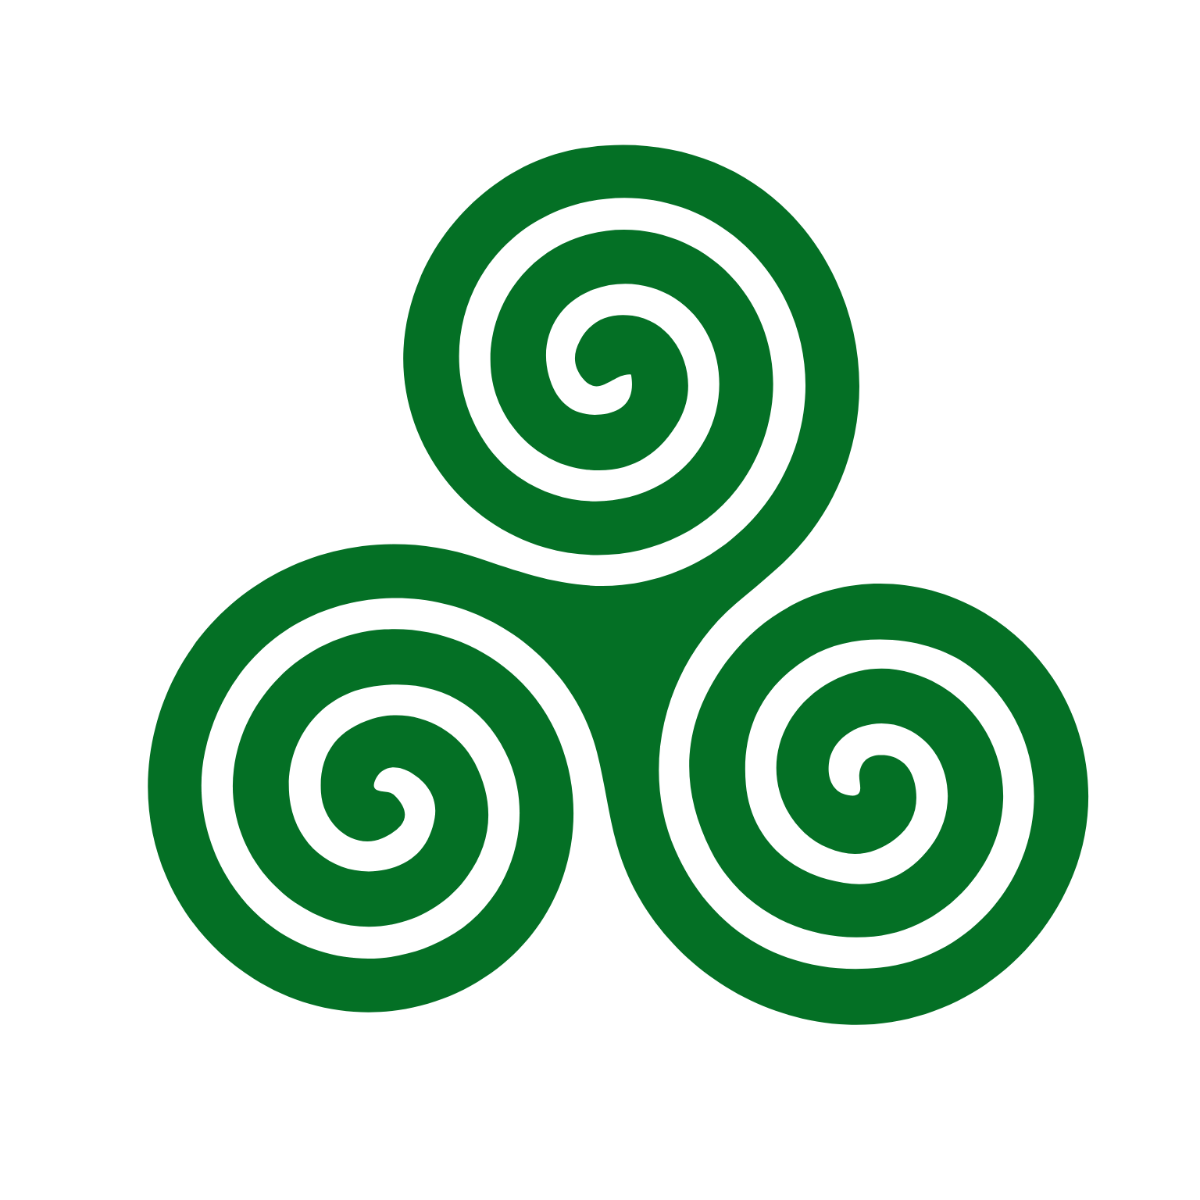 Celtic Spiral Clipart